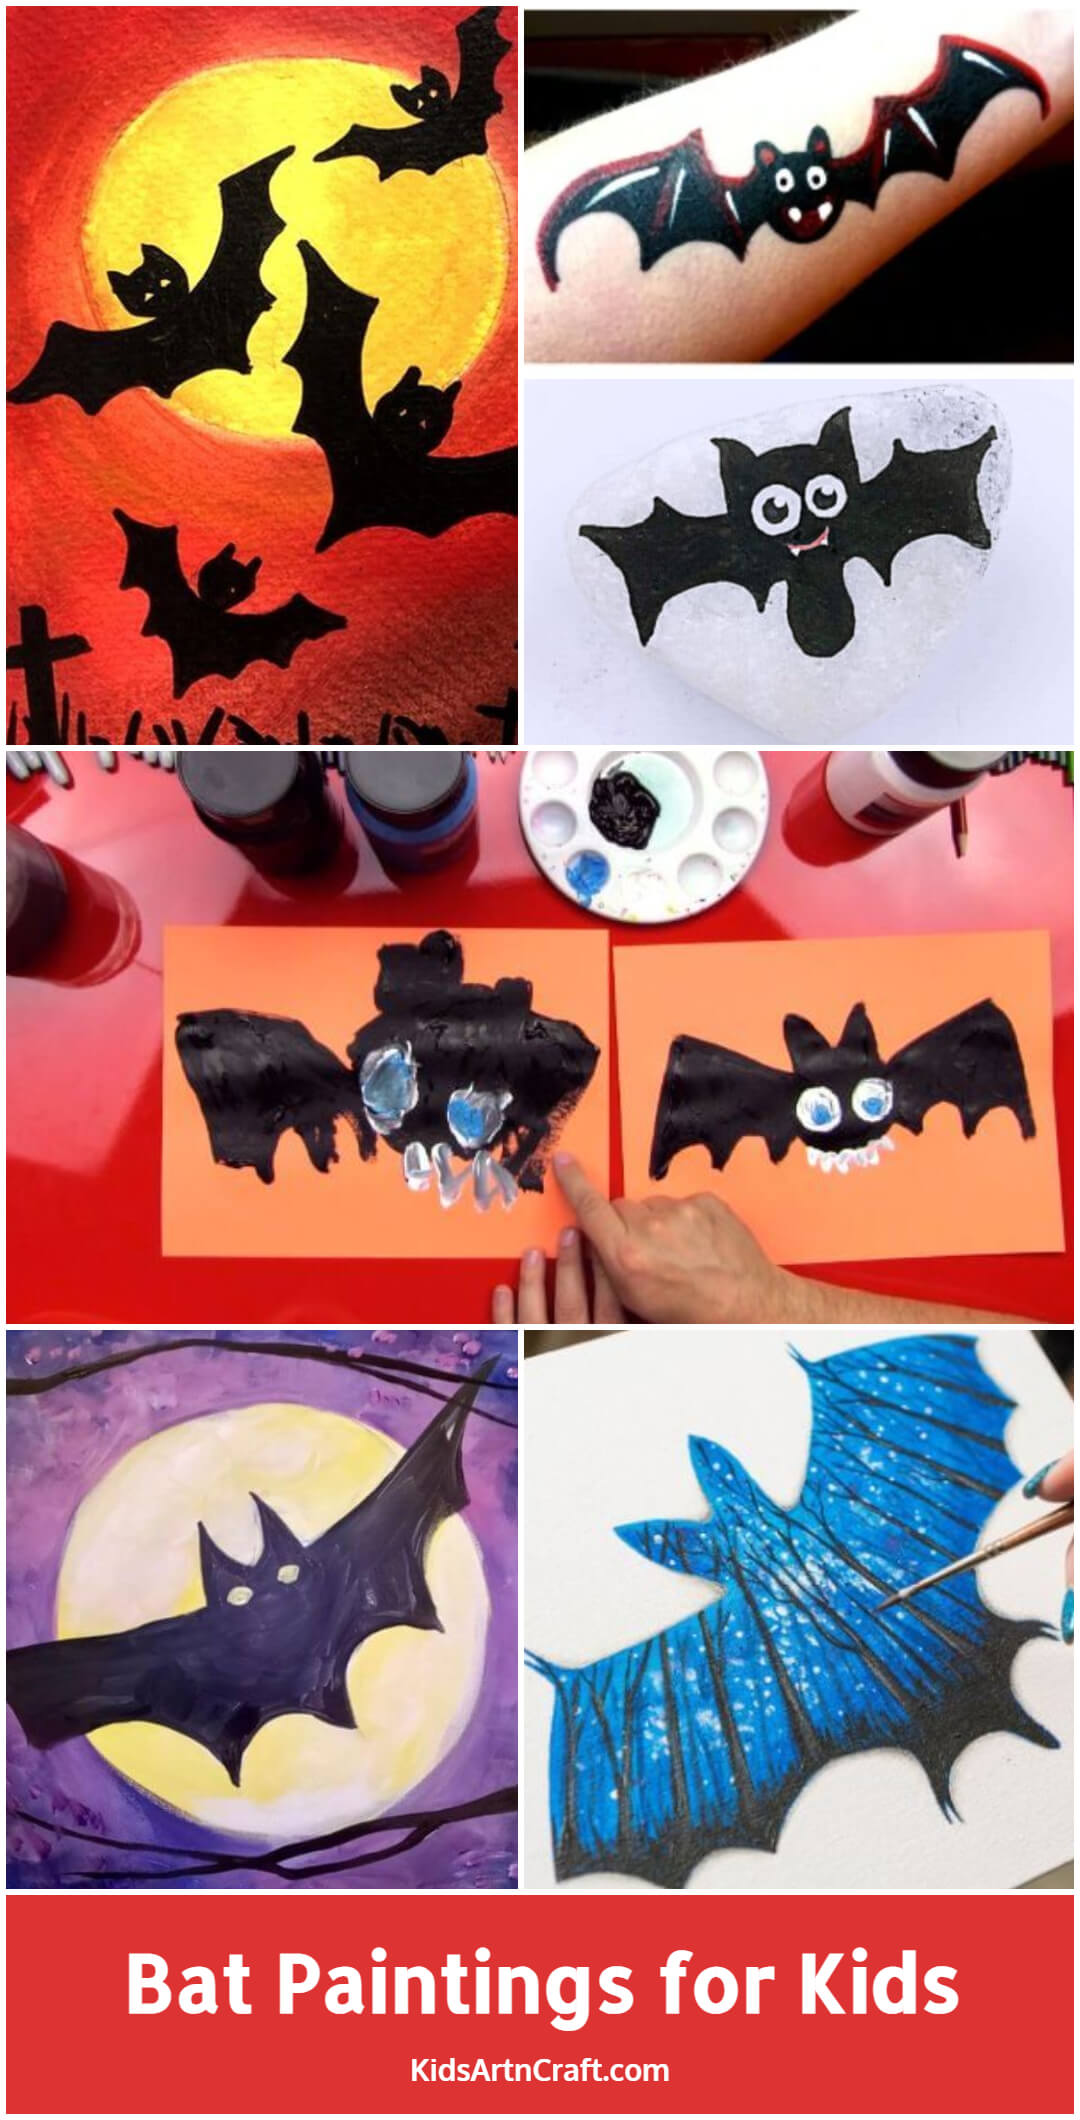 Bat Paintings for Kids